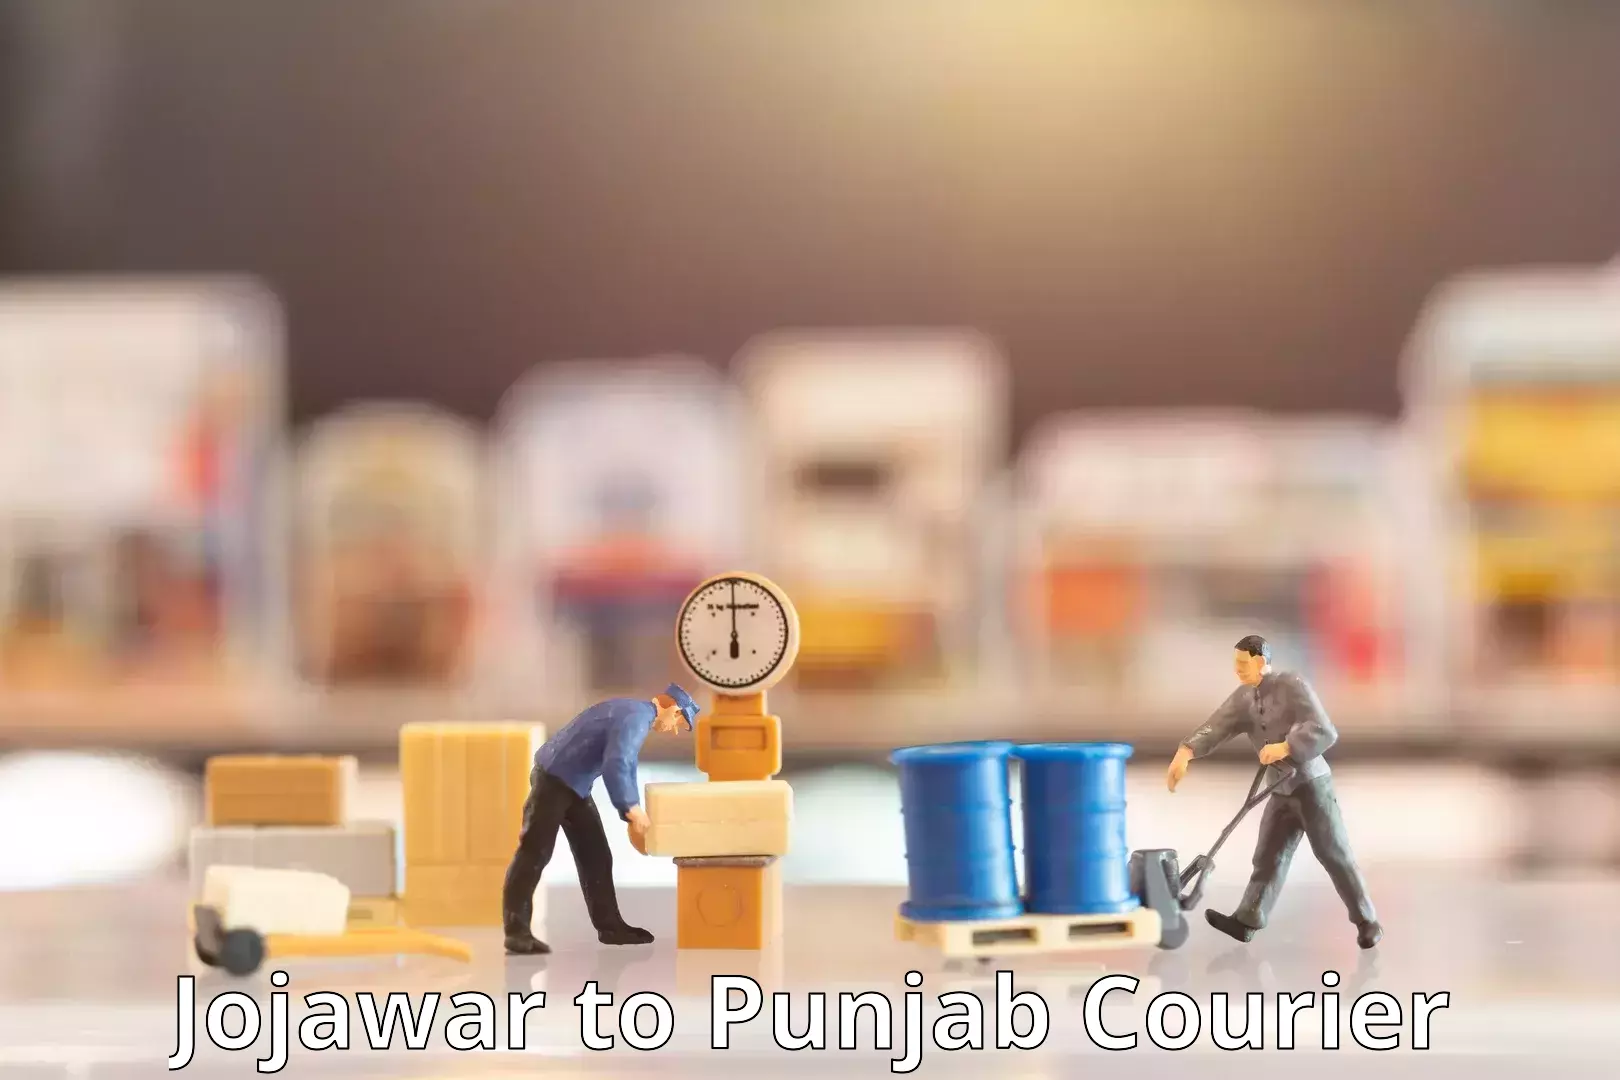 Nationwide delivery network Jojawar to Punjab